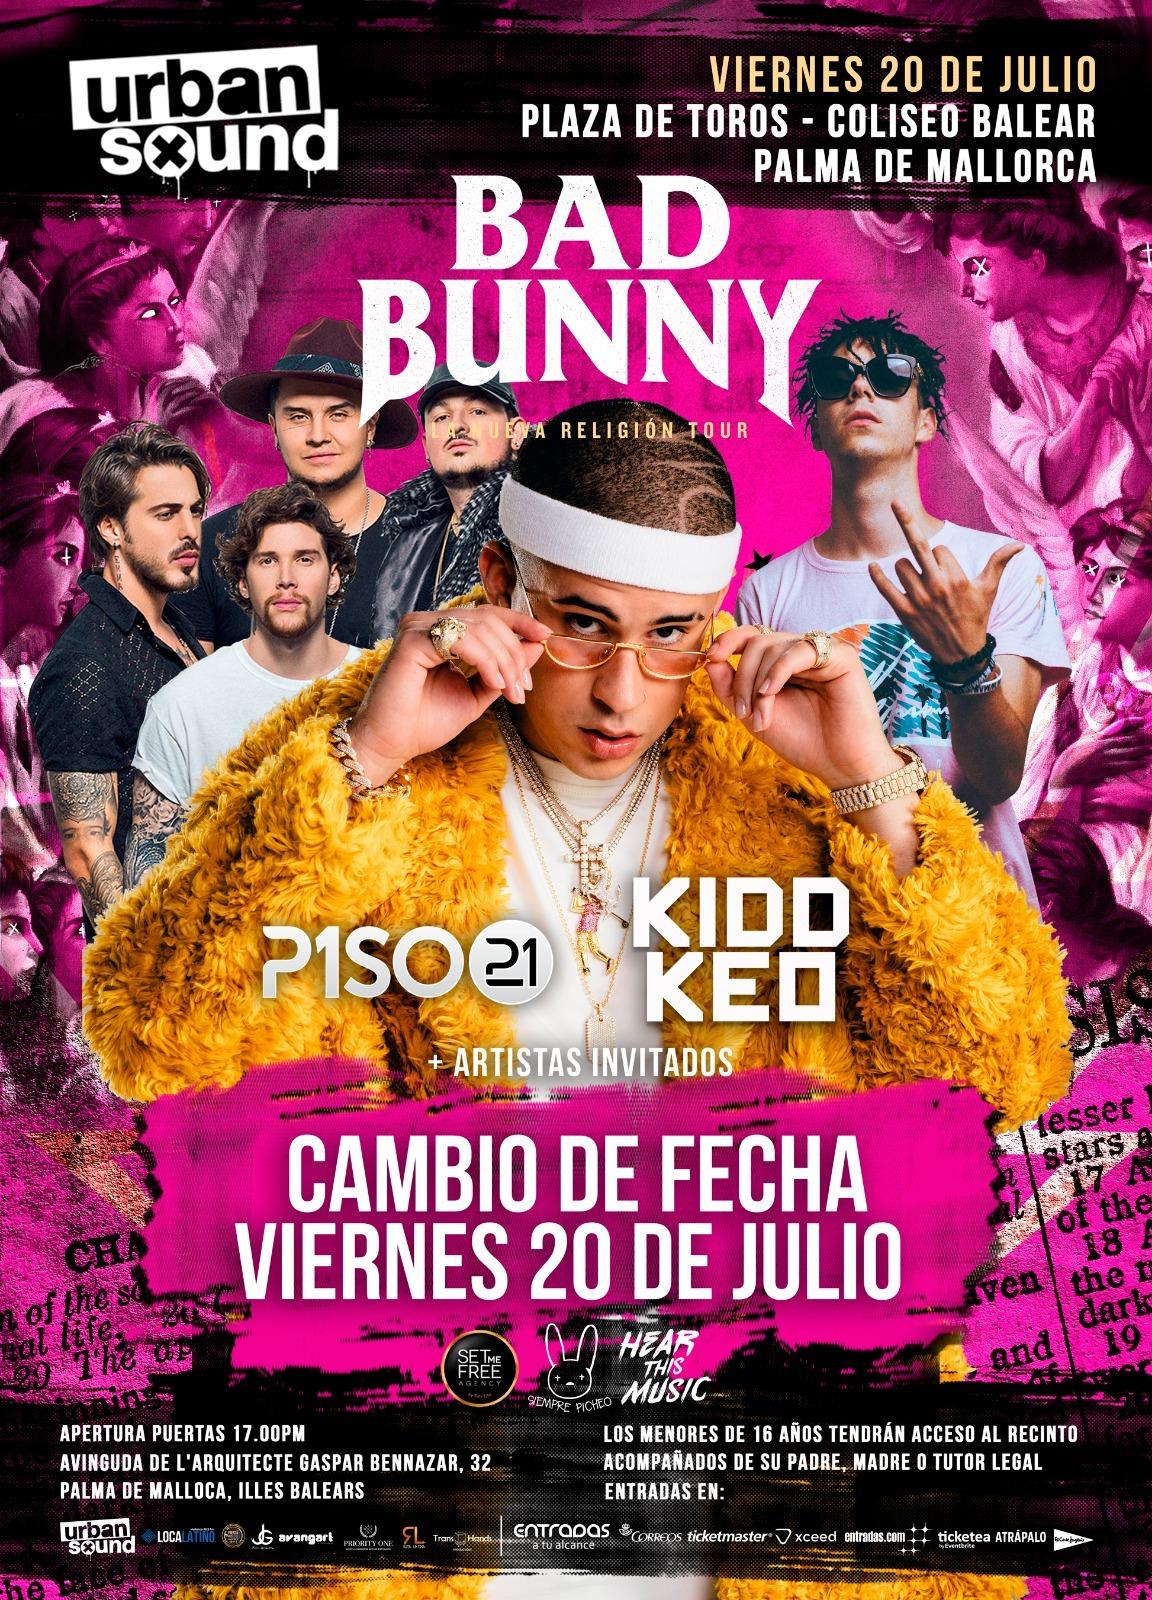 Bad Bunny - Nueva Religion Tour 2018 Mallorca